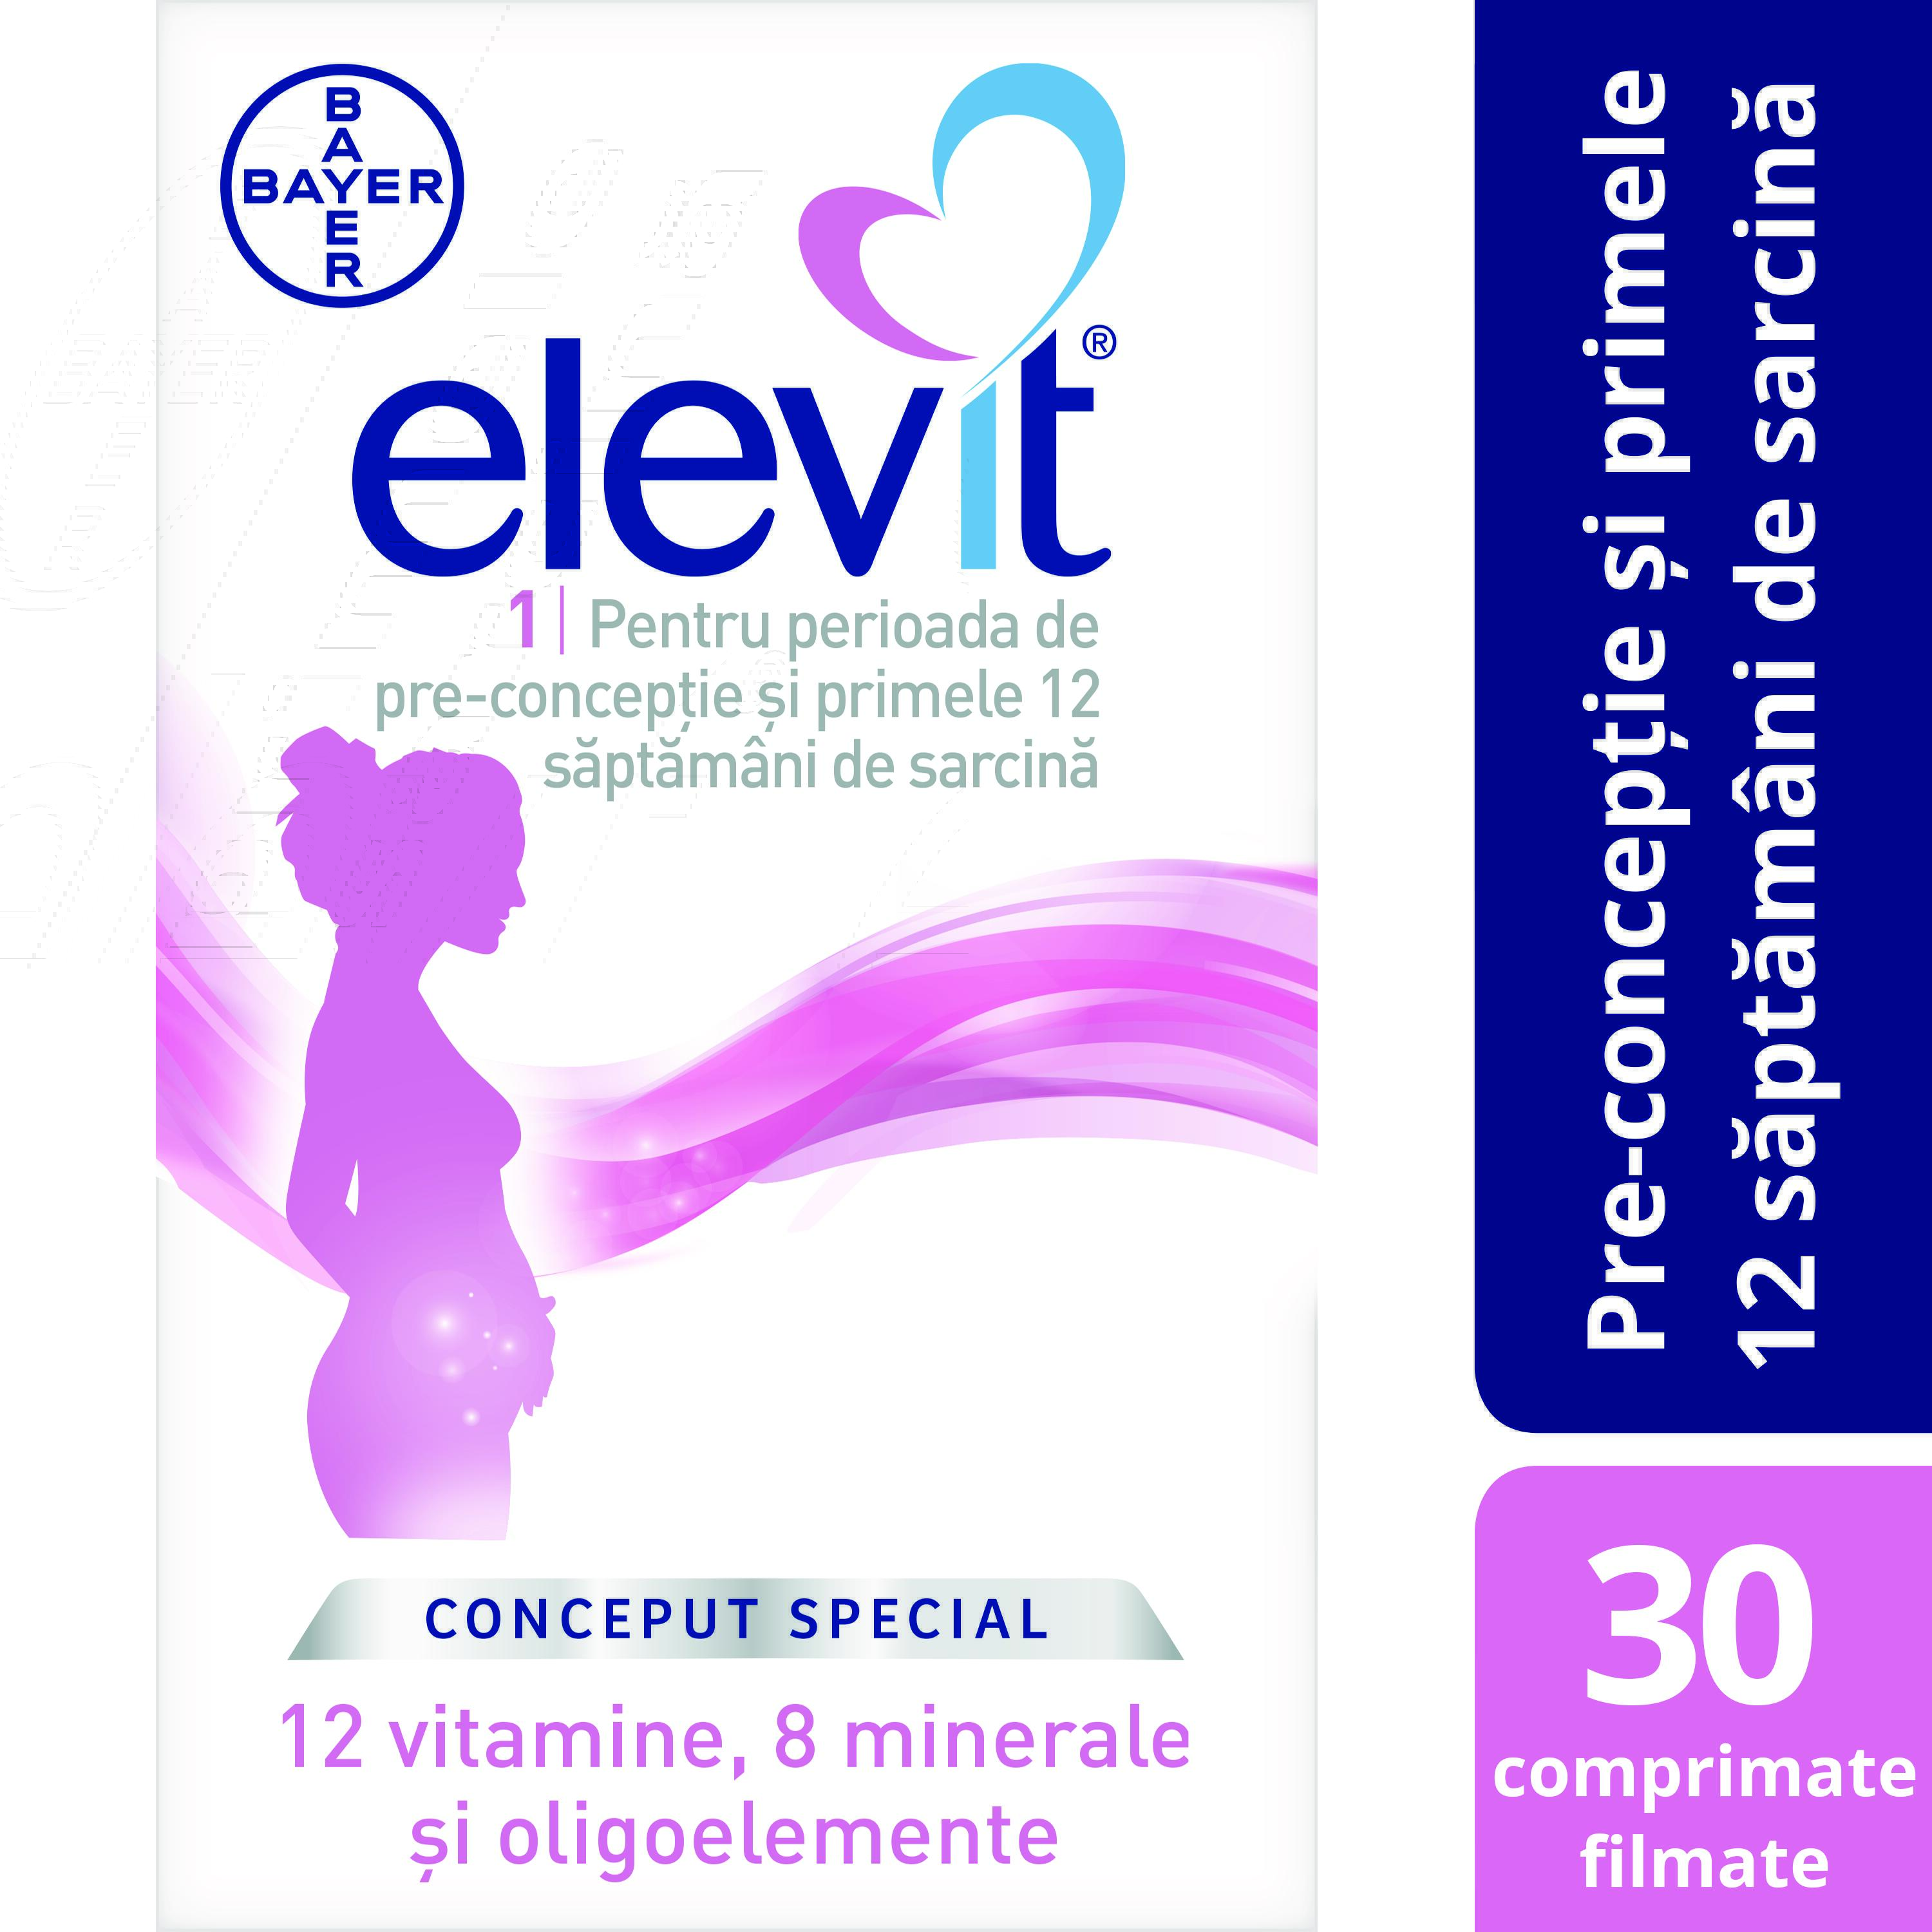 ELEVIT 1 30 COMPRIMATE FILMATE Bayer